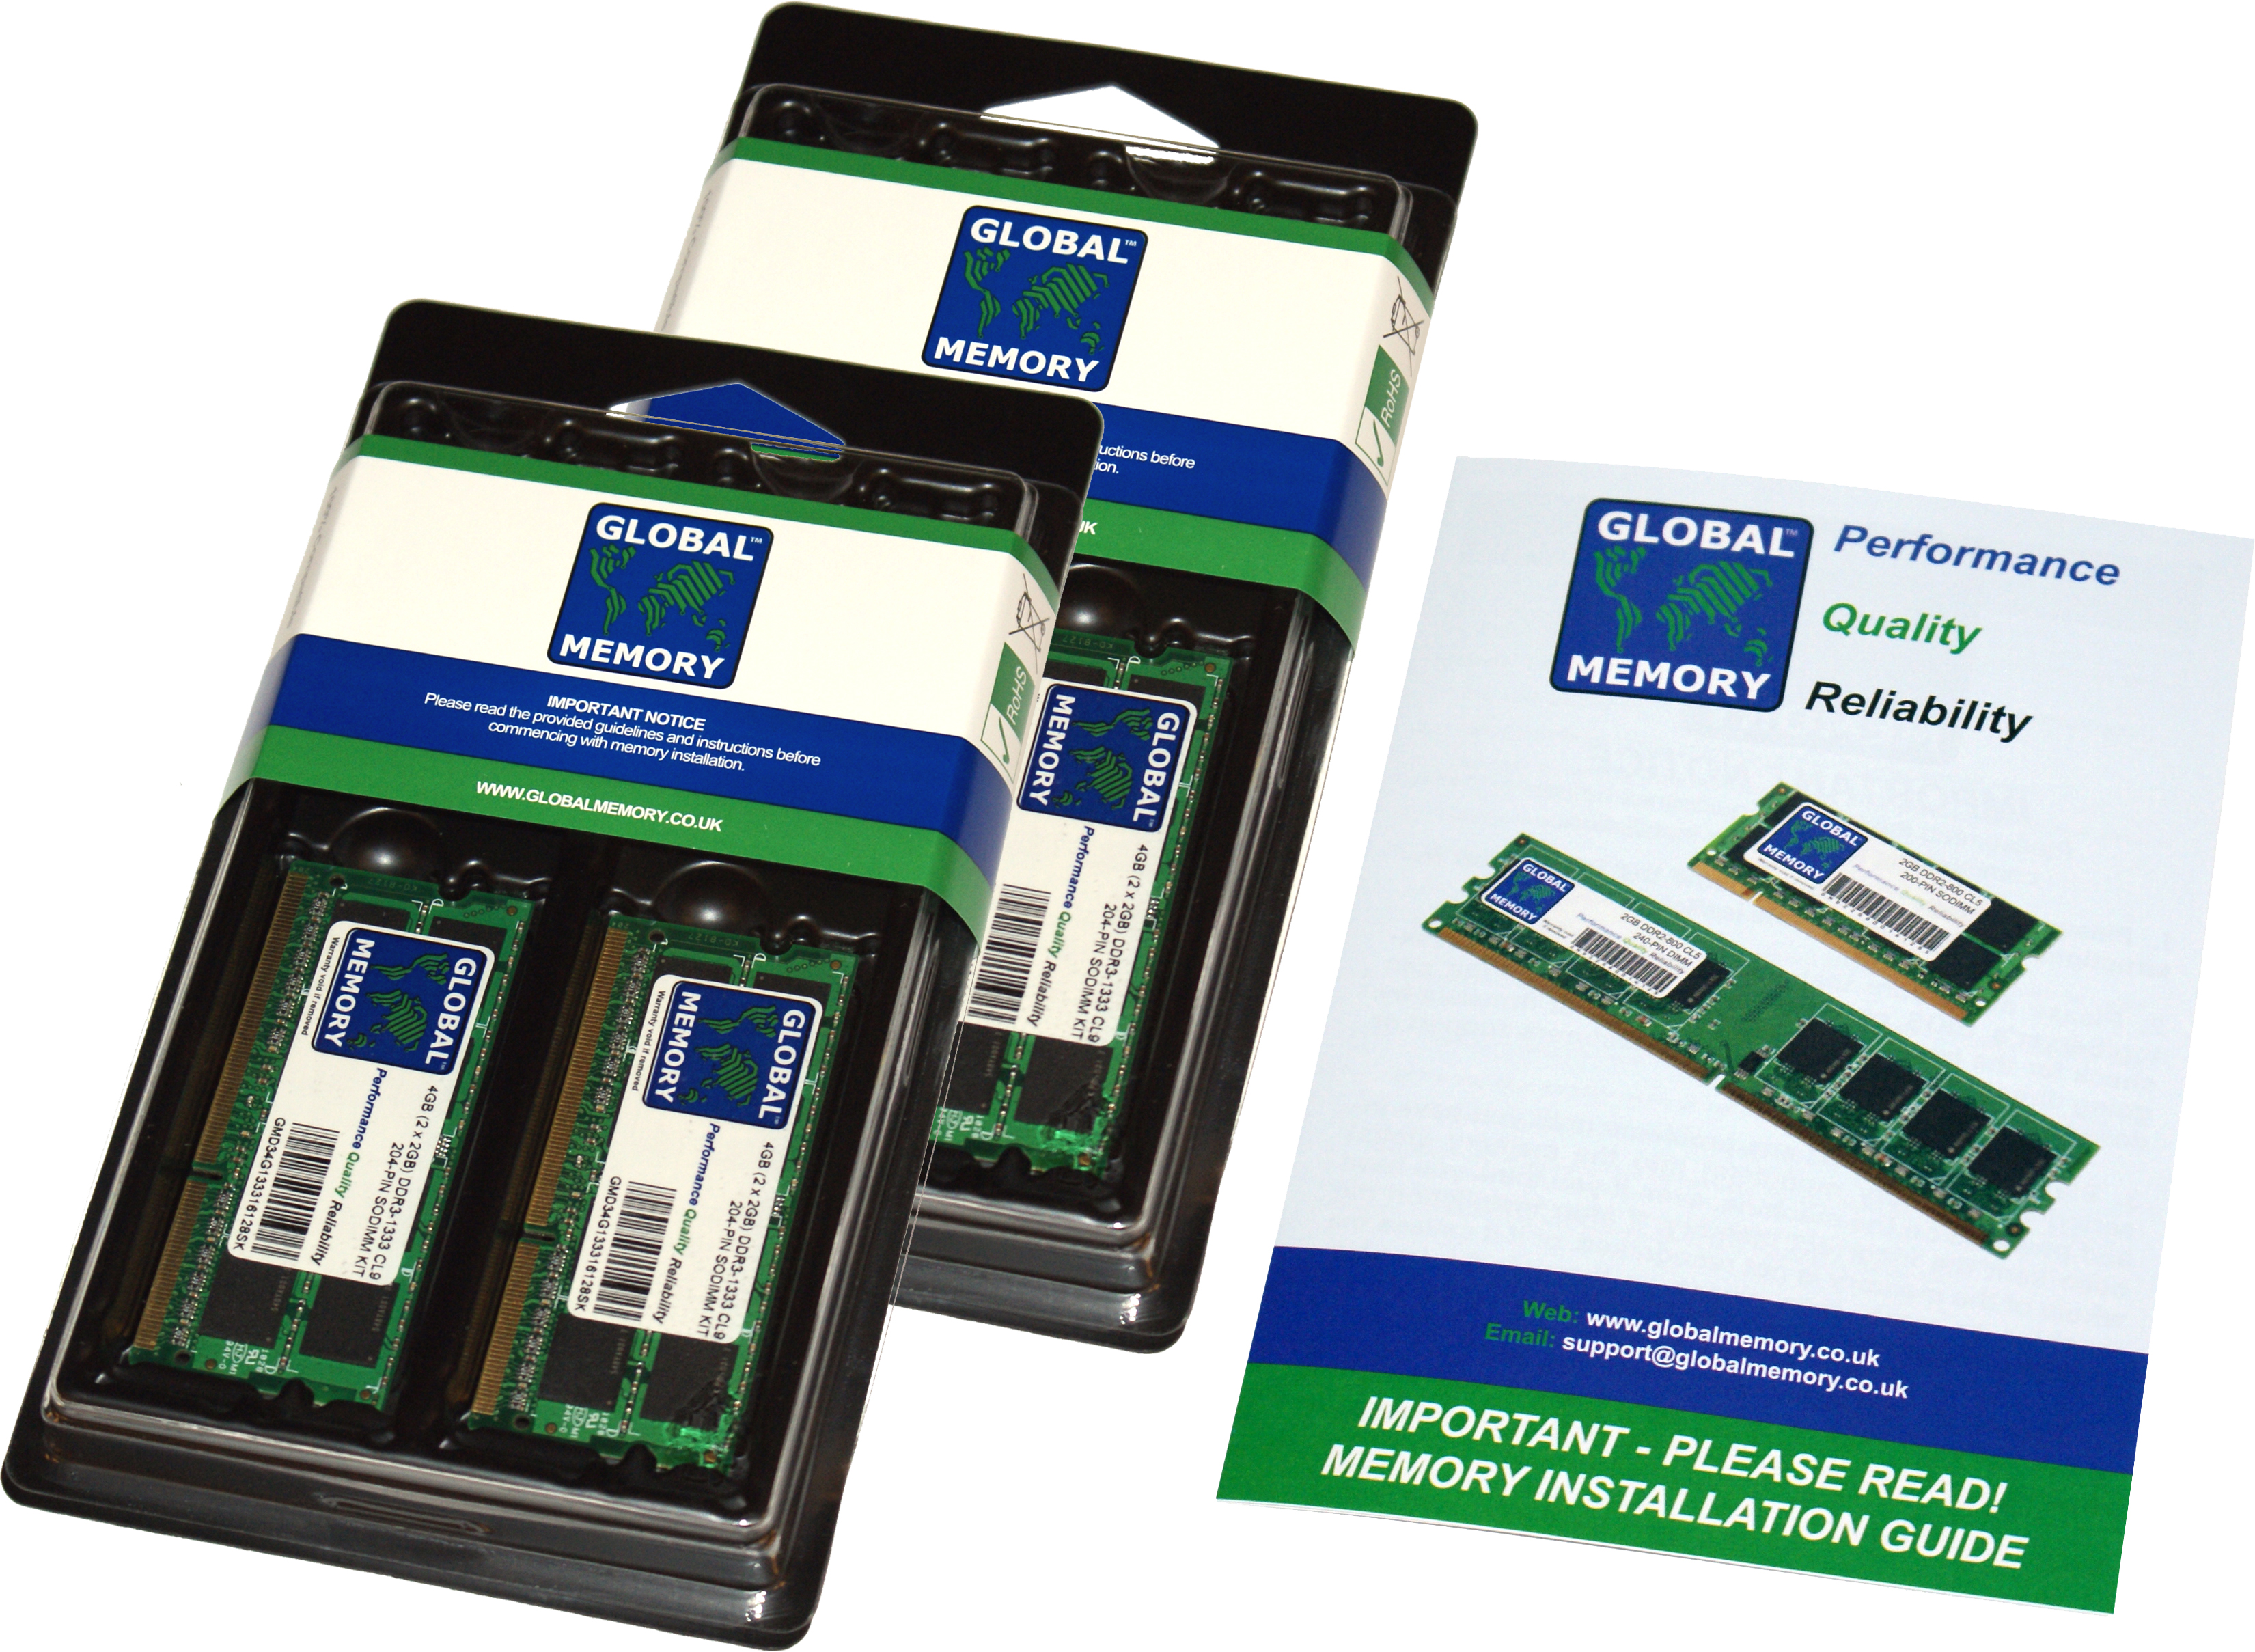 32GB (4 x 8GB) DDR3 1333/1600/1866MHz 204-PIN SODIMM MEMORY RAM KIT FOR LAPTOPS/NOTEBOOKS